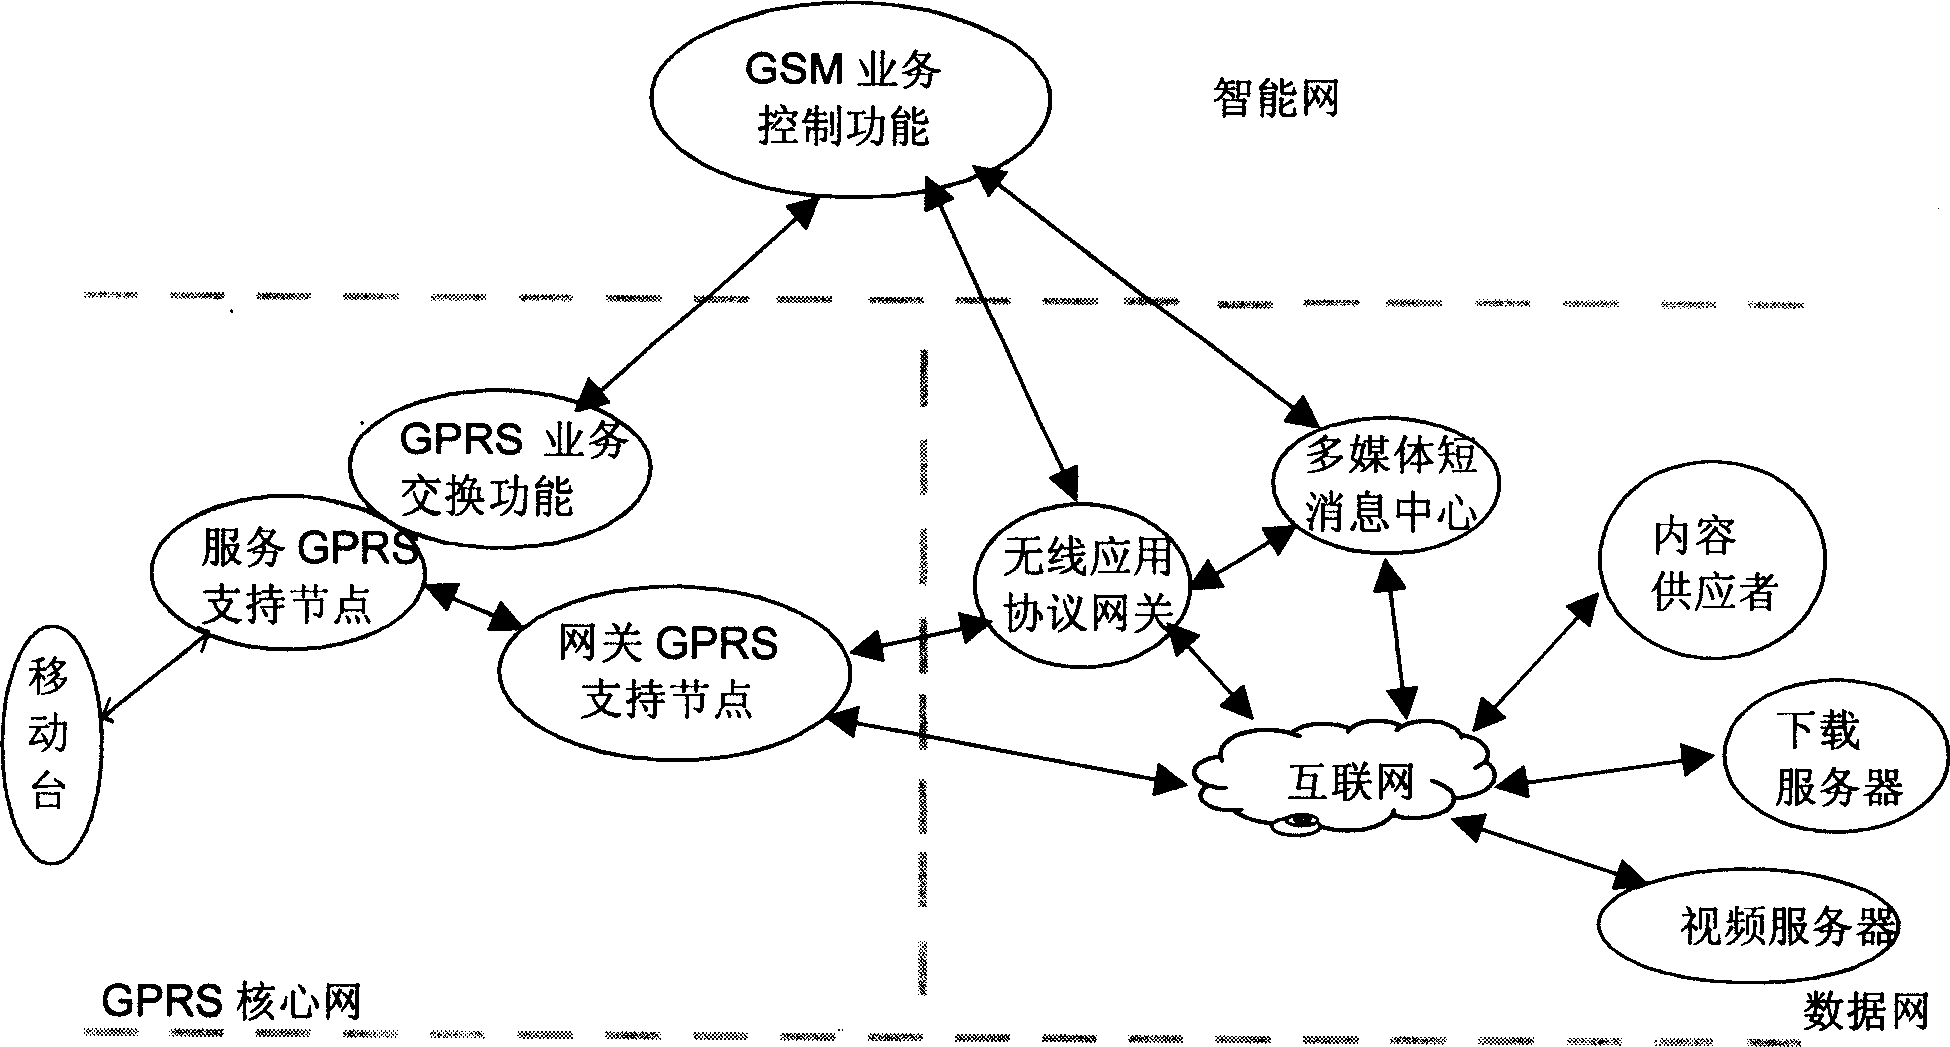 Metering method based on universal group radio operation flow